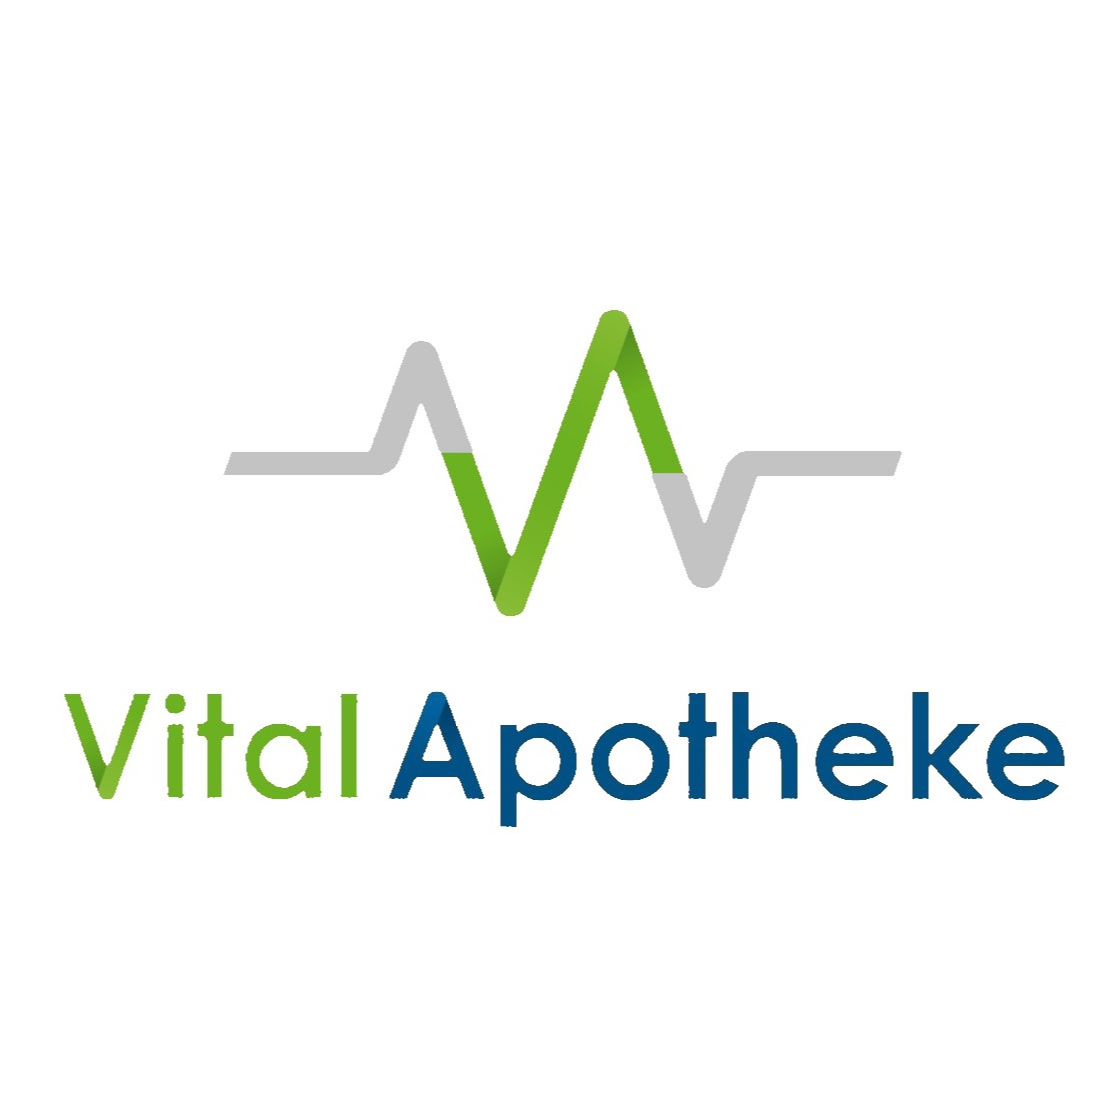 Vital-Apotheke in Mönchengladbach - Logo